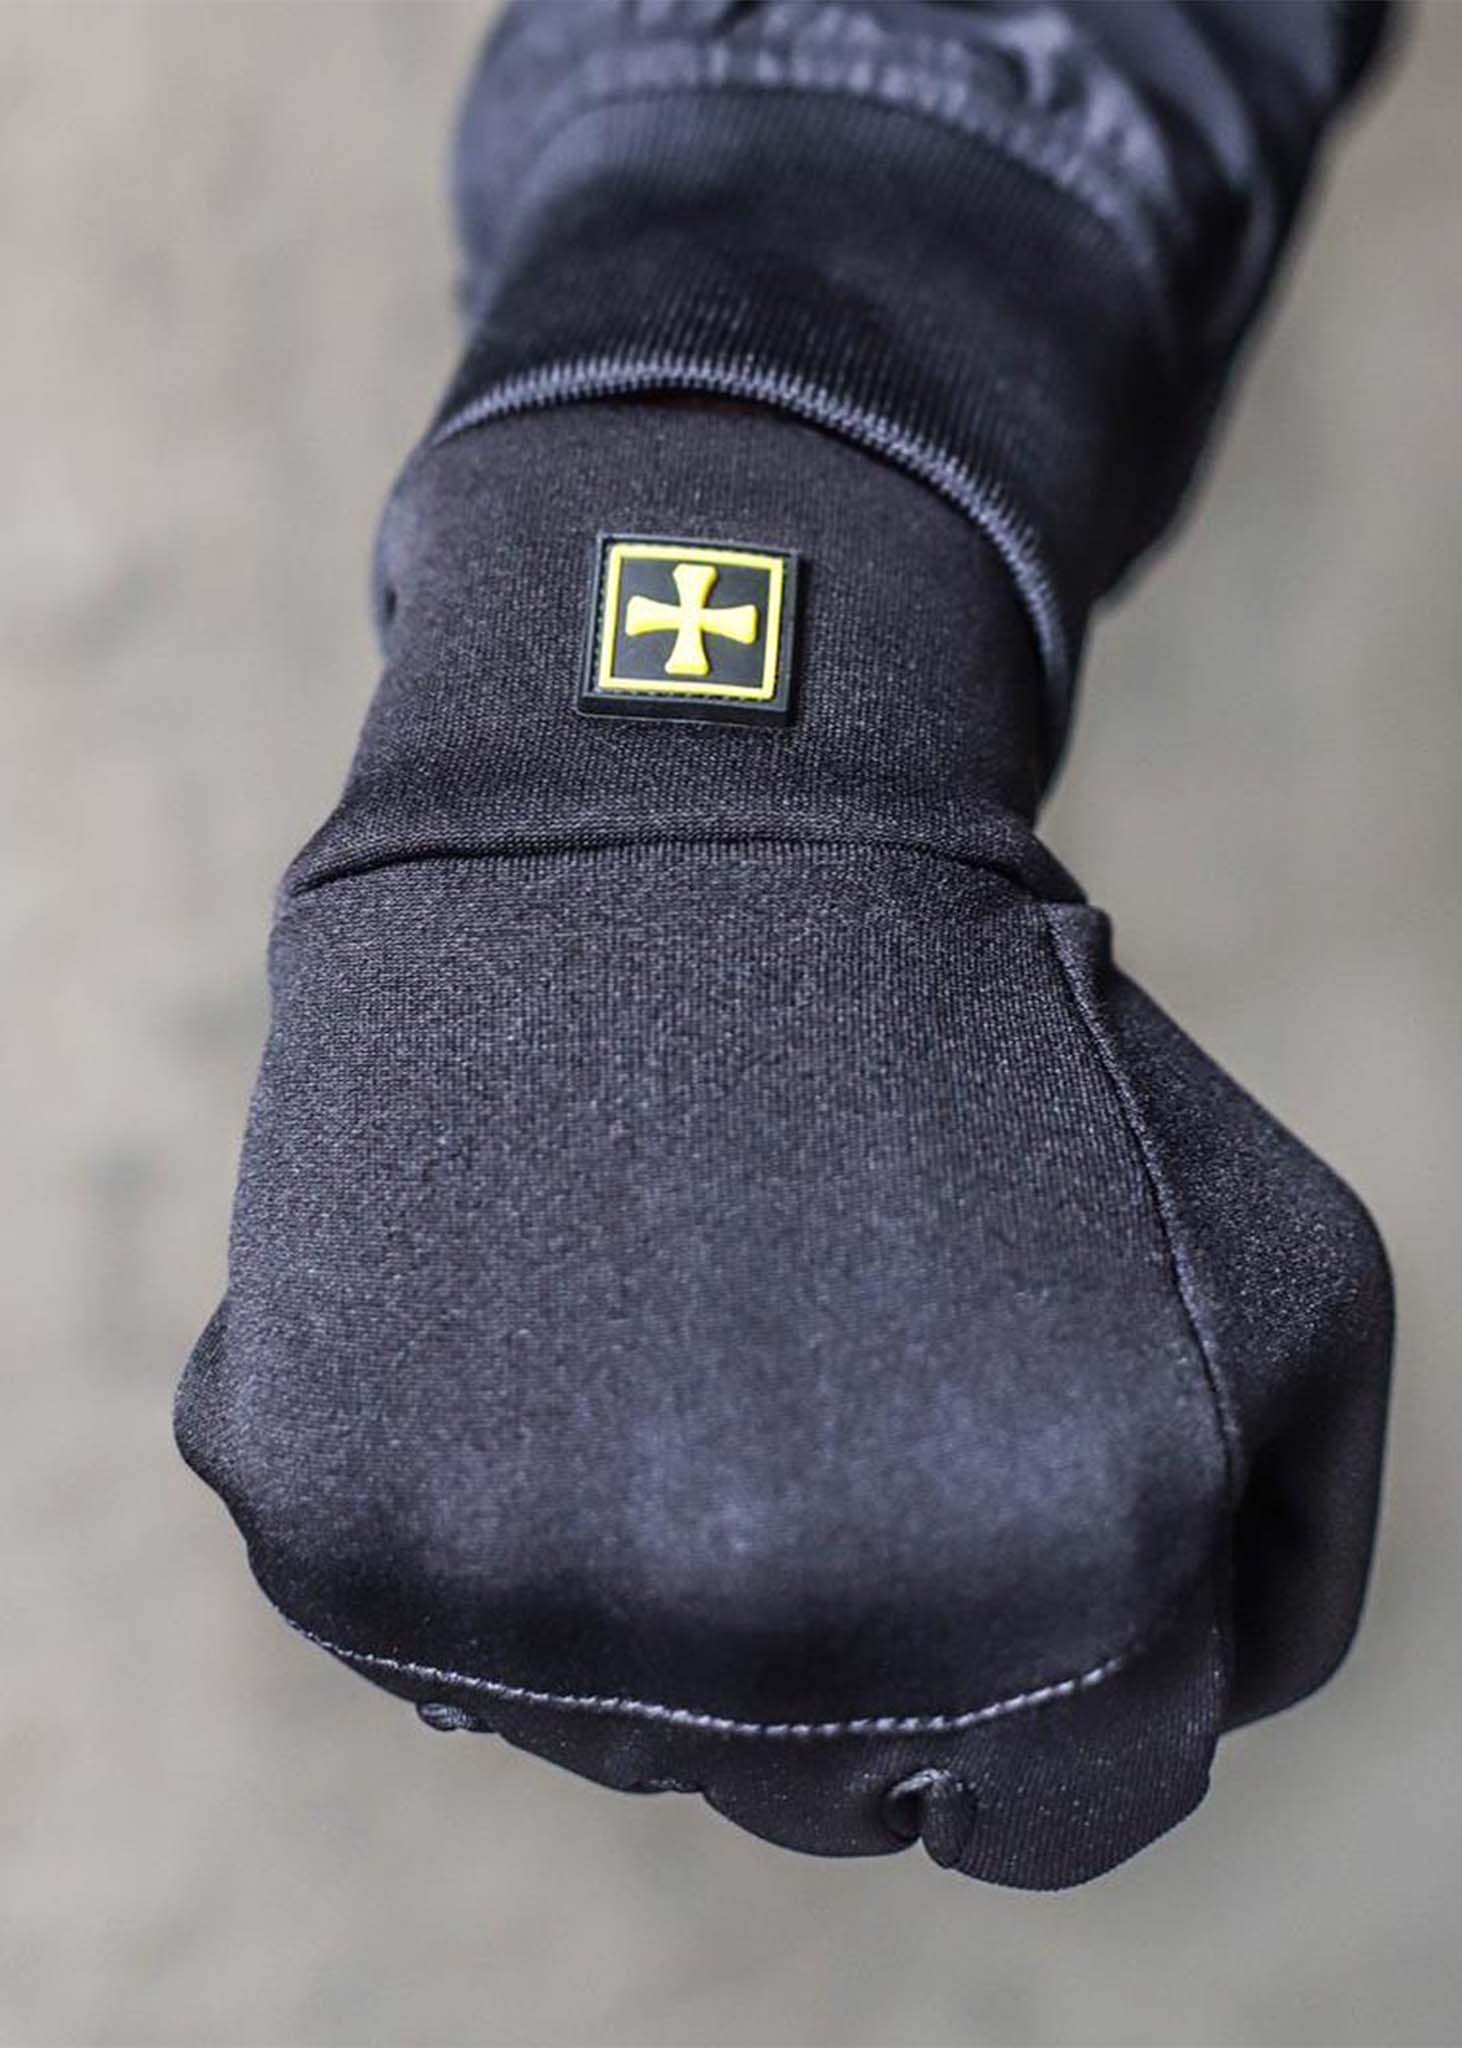 Terrace Cult Handschoenen  Tech gloves - black 